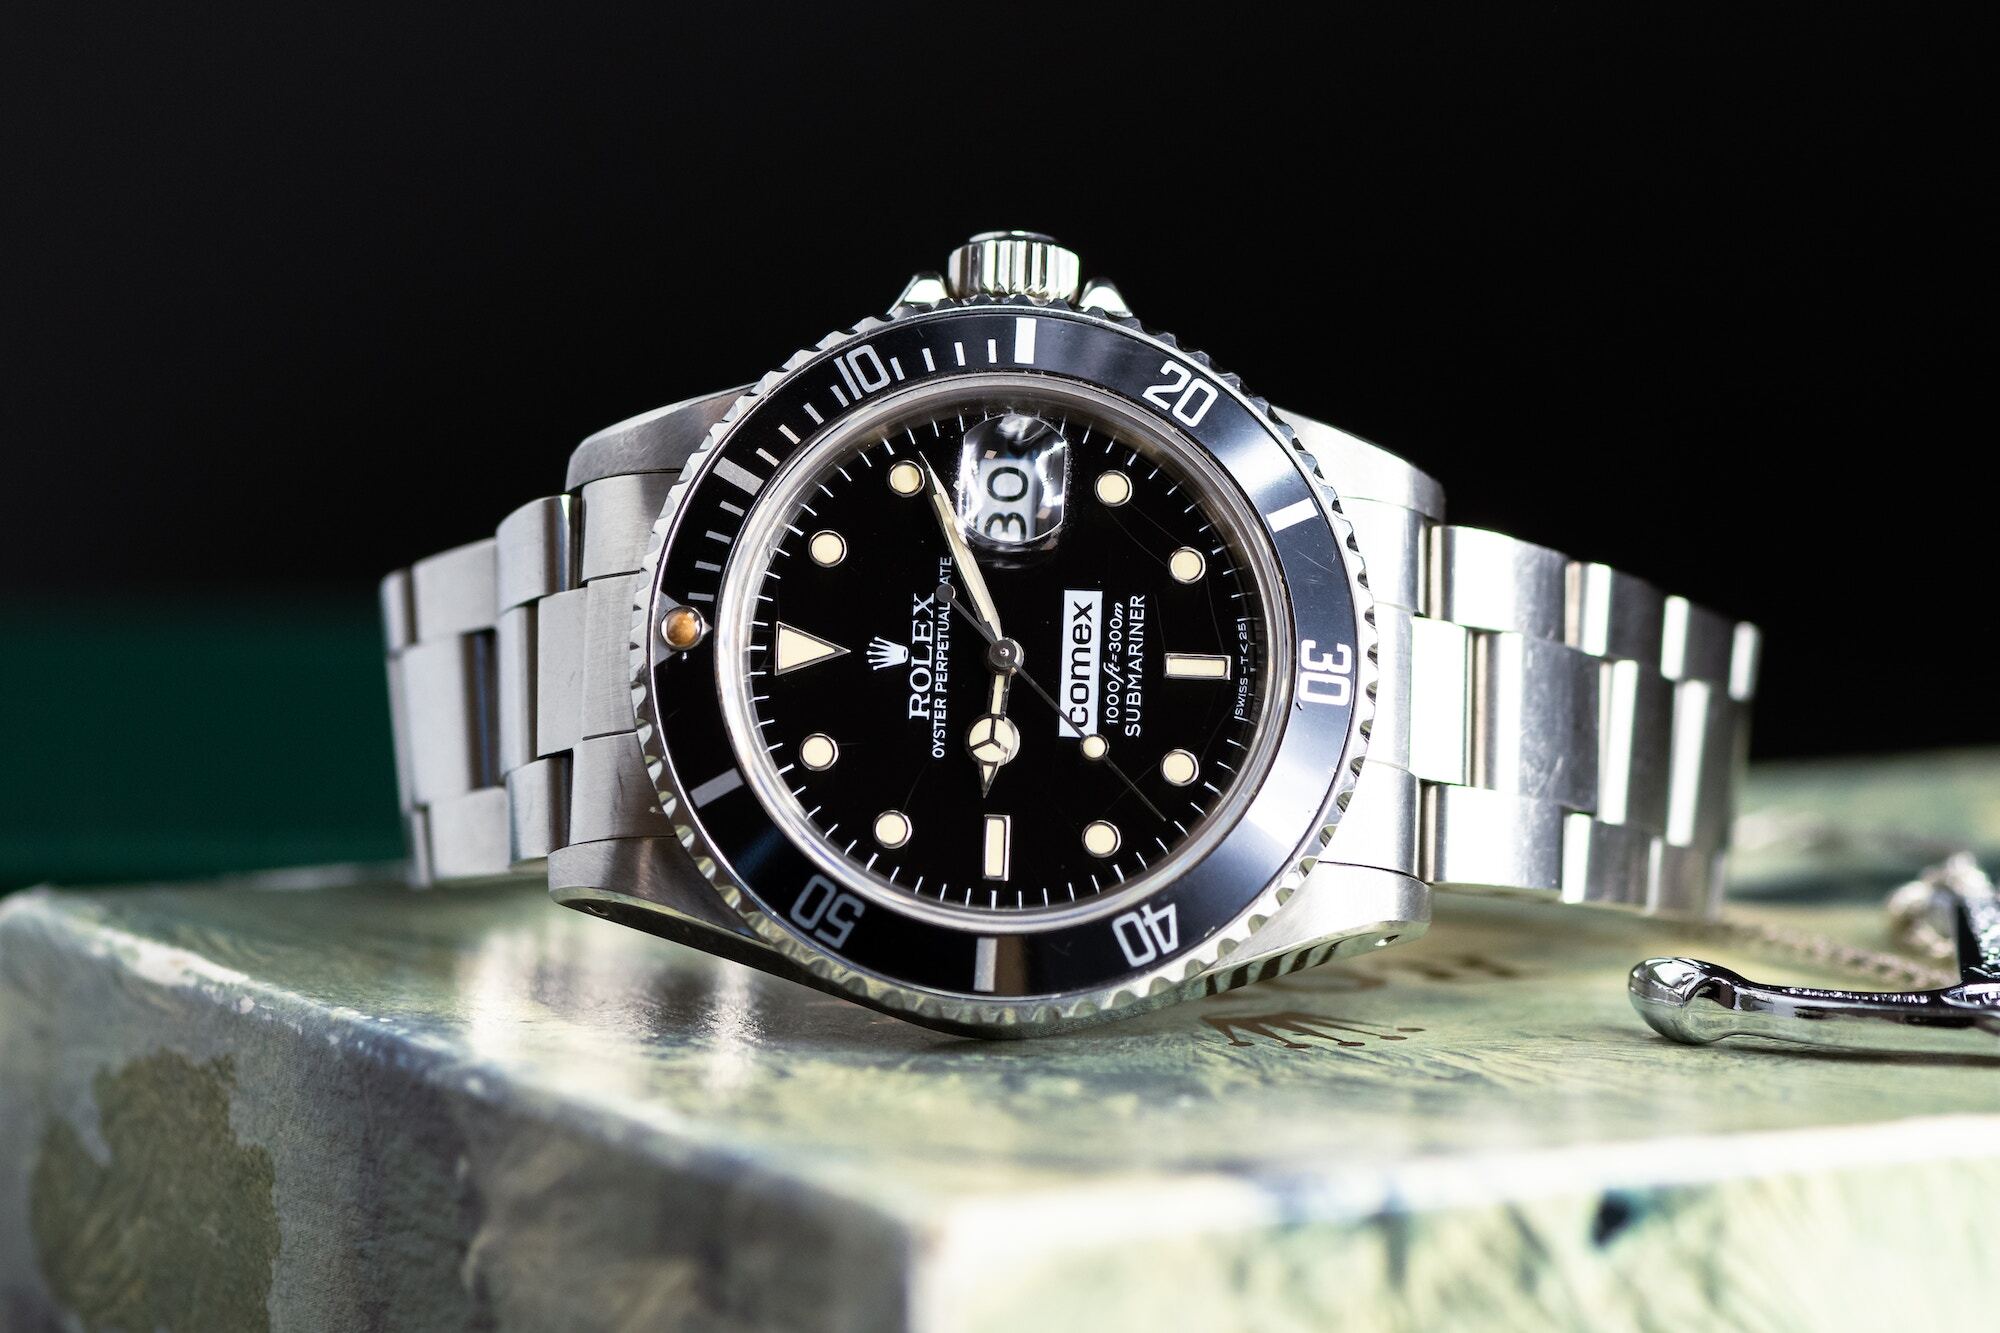 Exquisite Rolex Comex 5514 on the Wrist